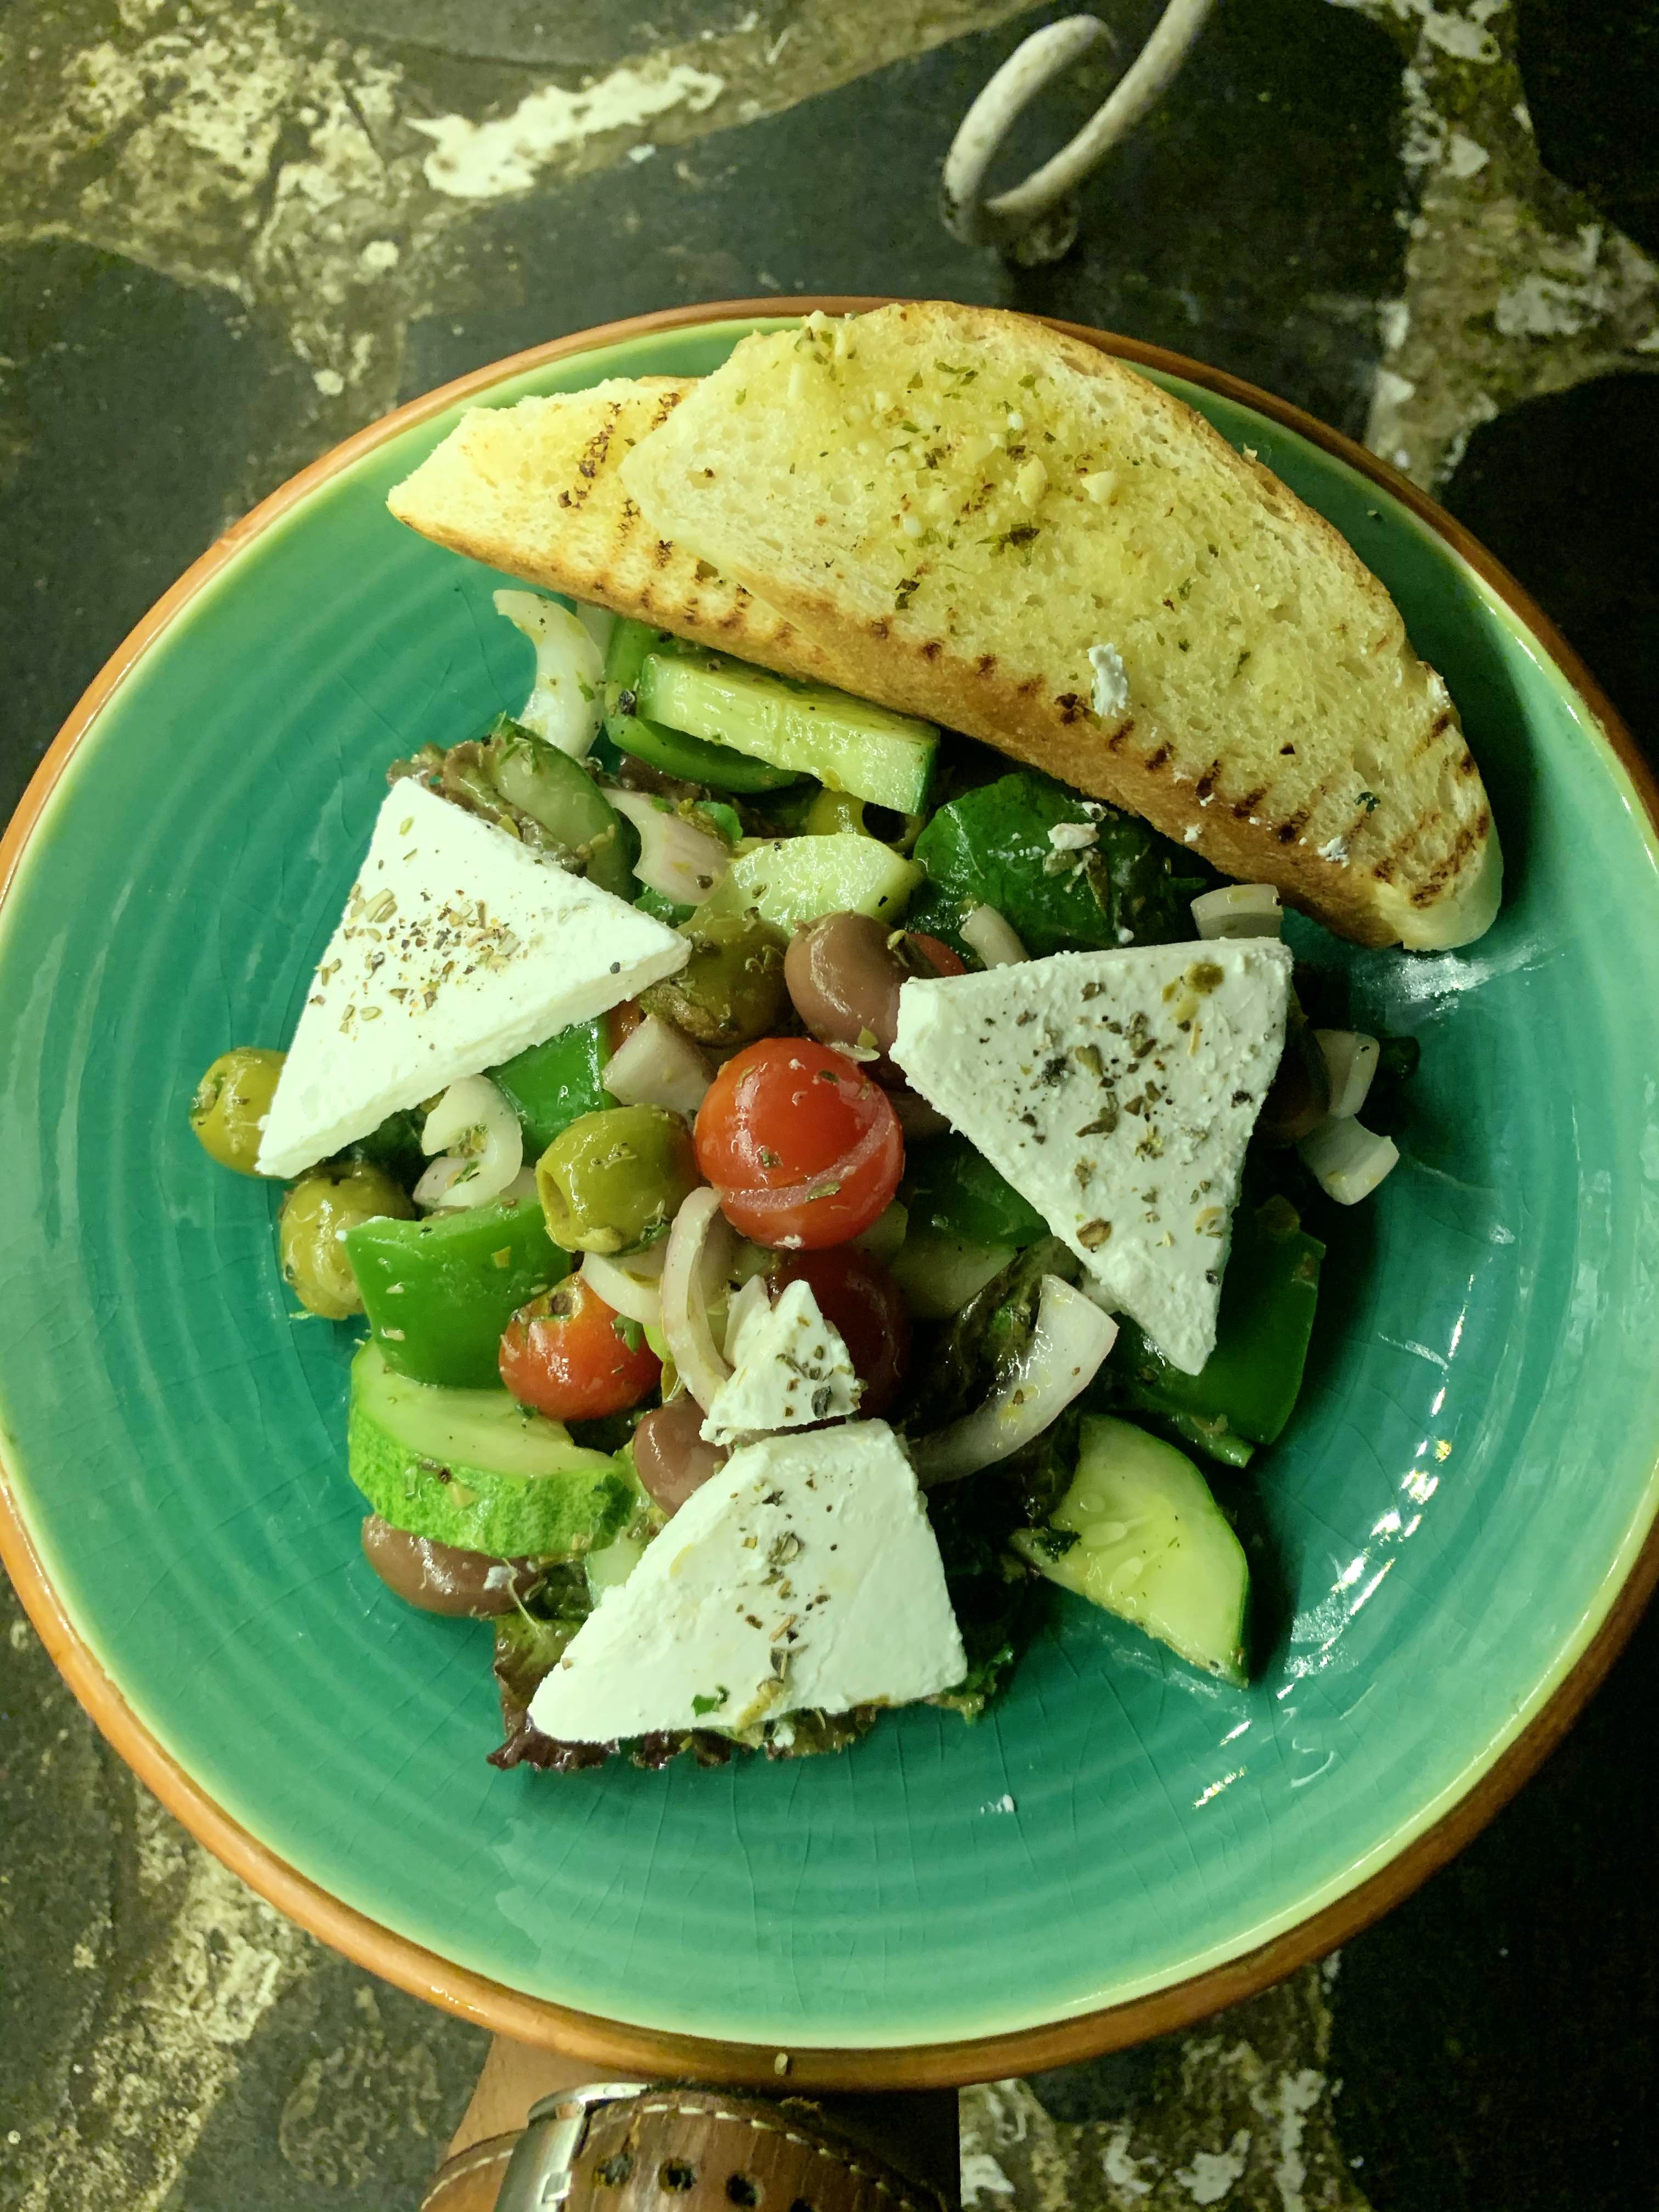 Dish,Food,Cuisine,Salad,Greek salad,Ingredient,Produce,Lunch,Vegan nutrition,Vegetarian food